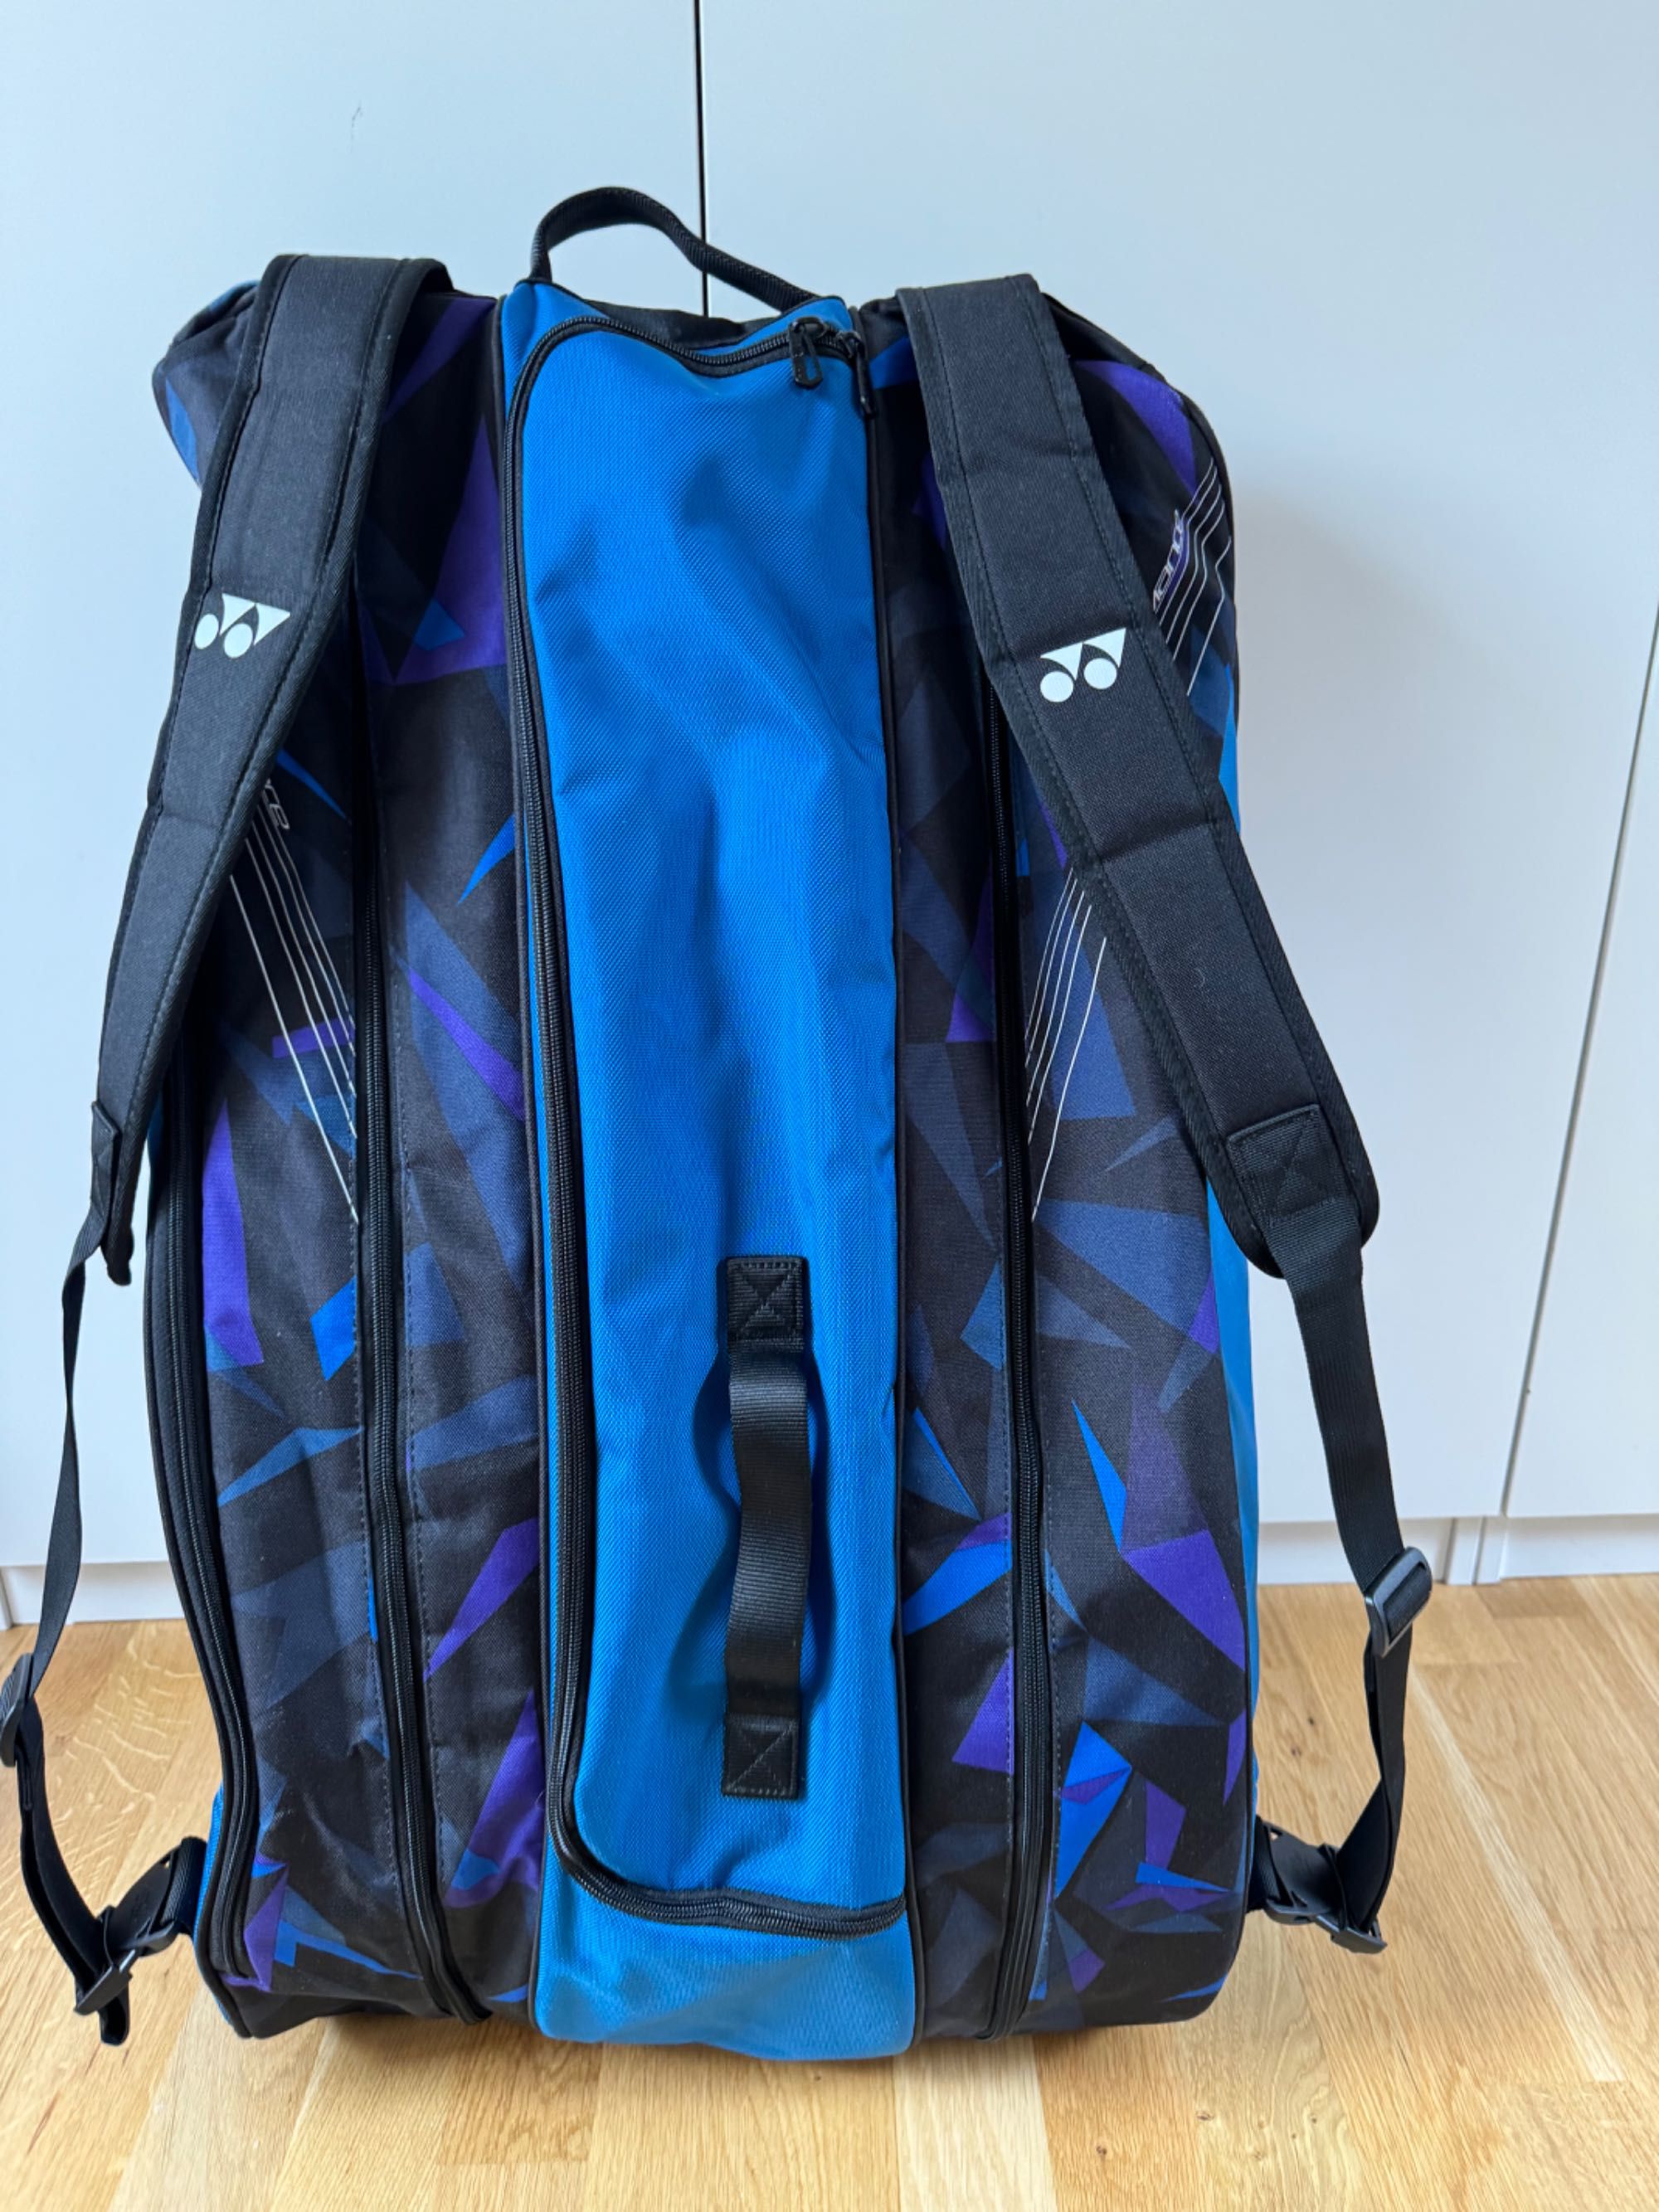 Torba tenisowa
Yonex Pro Racquet Bag 12 Pack - fine blue